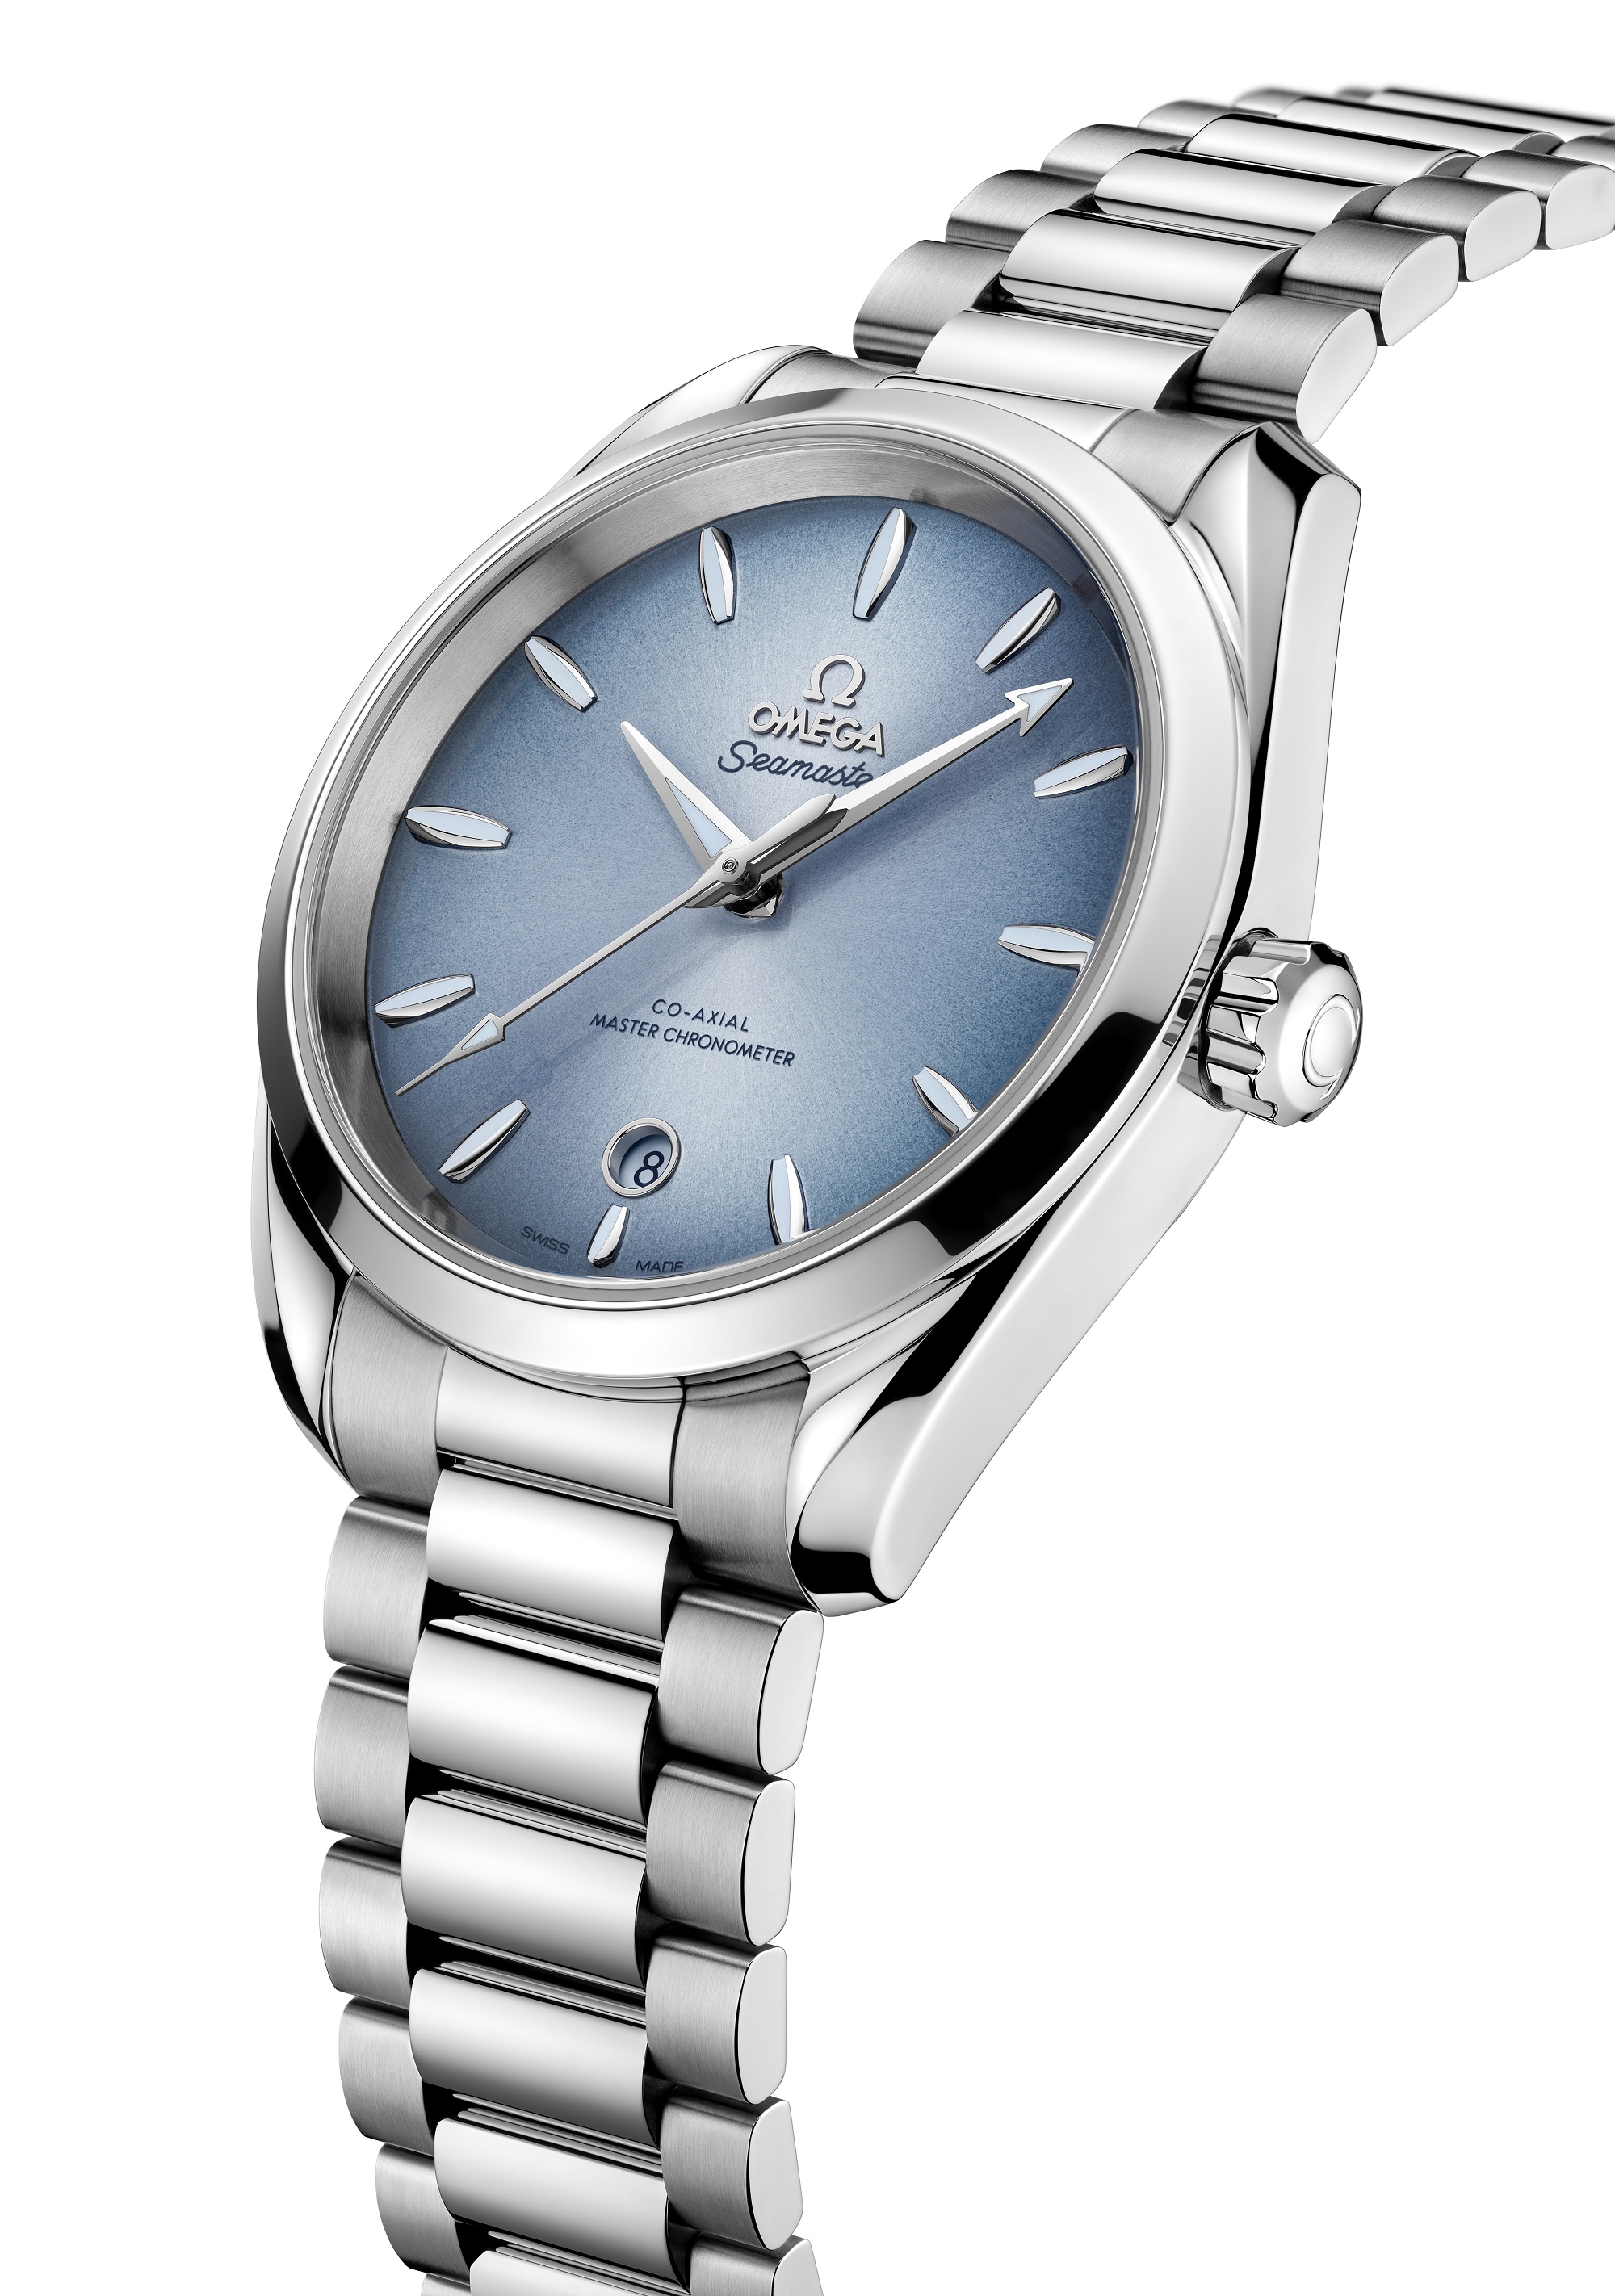 Close up image Omega Seamaster Aqua Terra watch